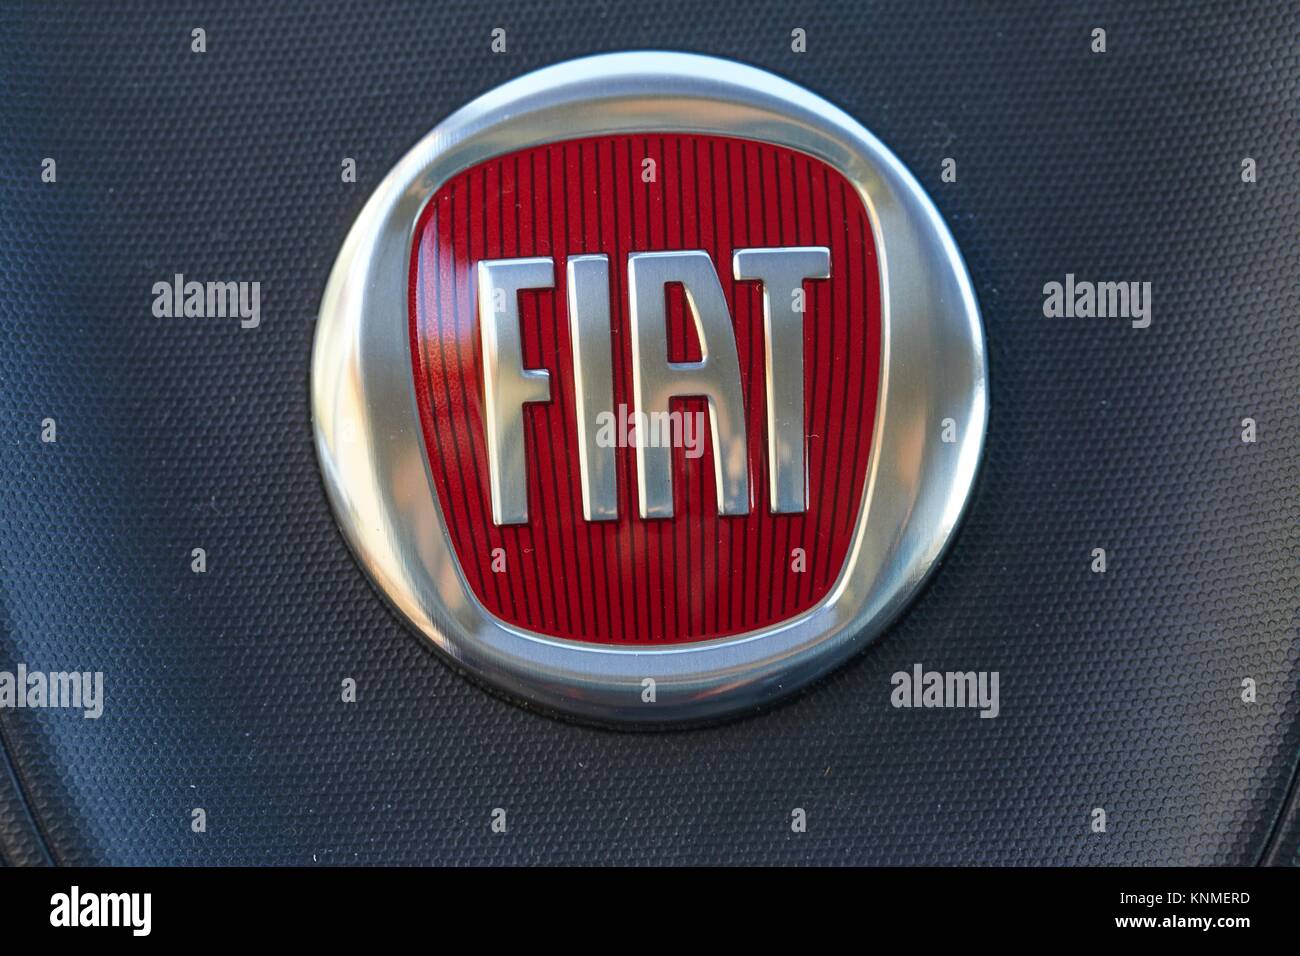 Fiat car logo Stock Photo